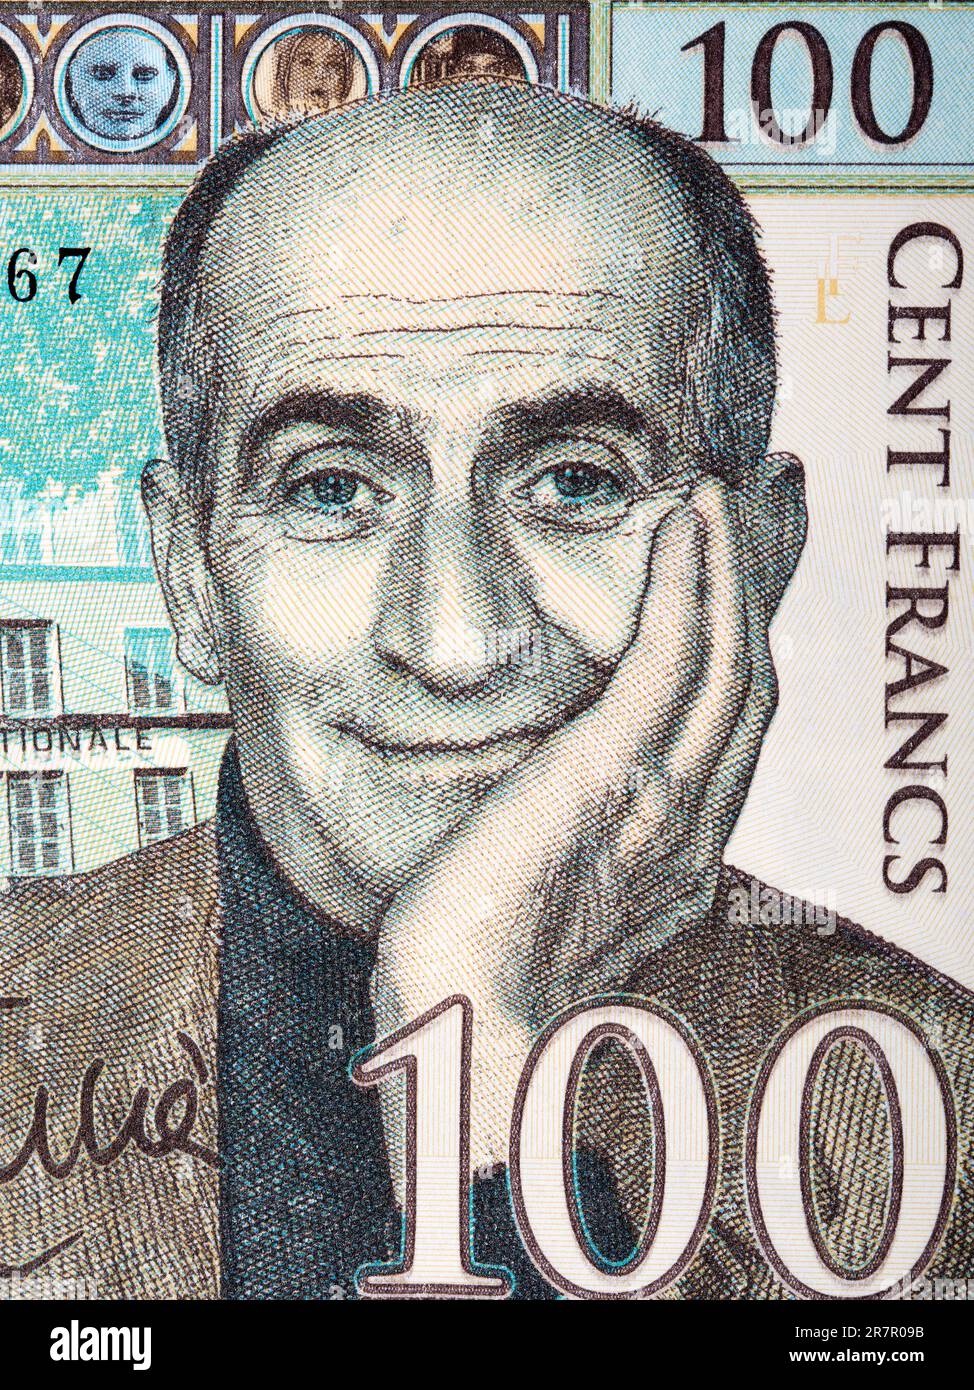 Louis de Funes un ritratto di denaro francese Foto Stock